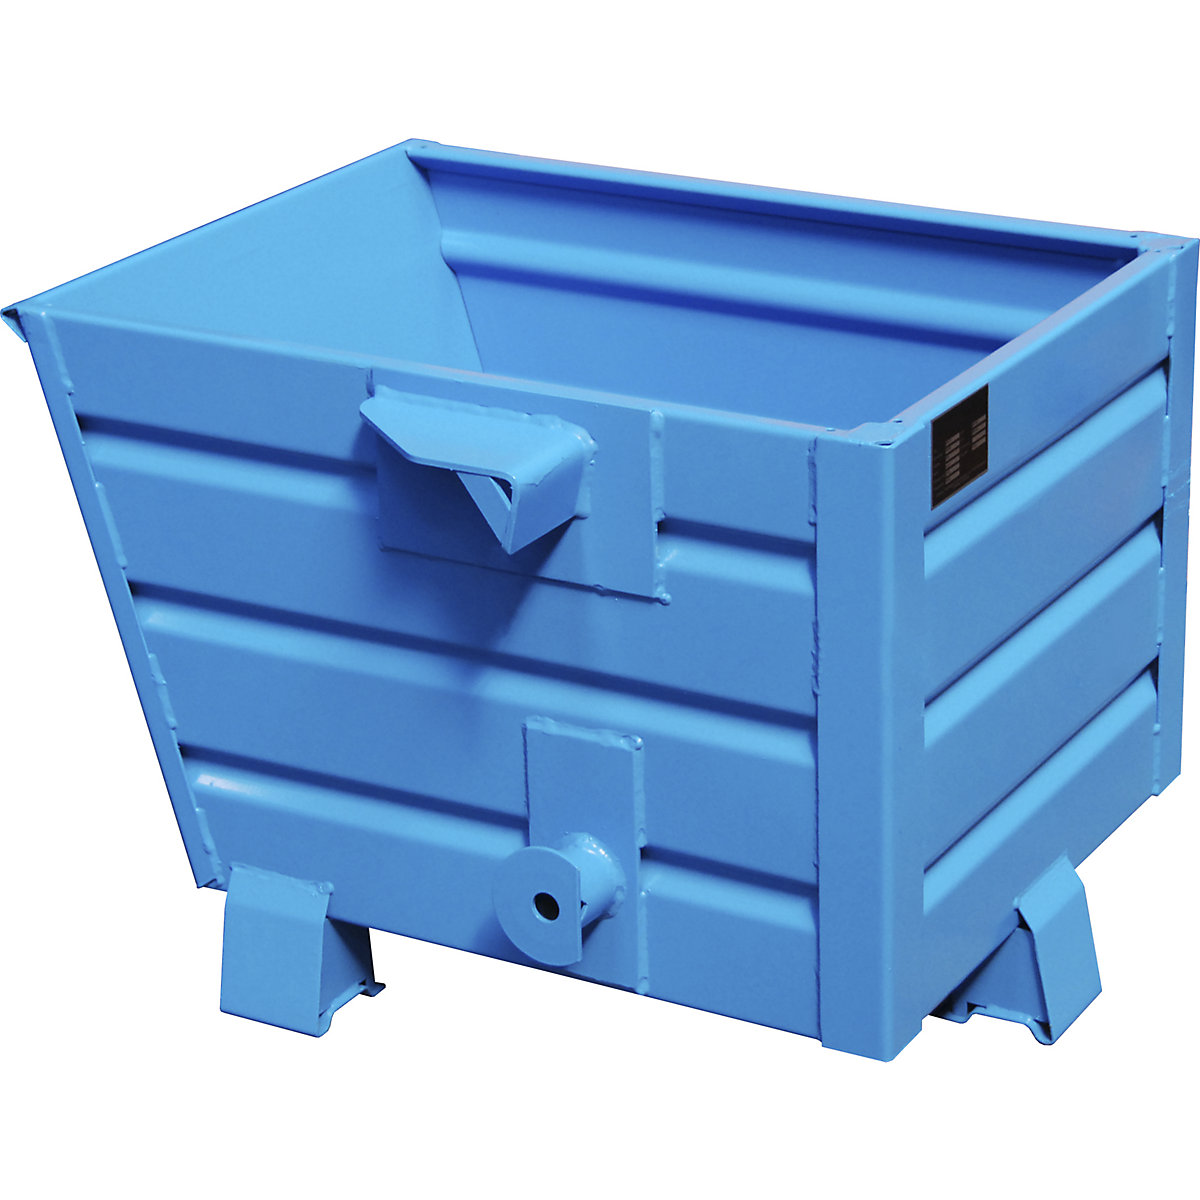 EUROKRAFTpro – Container basculant și stivuibil pentru șpan BSS, volum 0,3 m³, albastru deschis